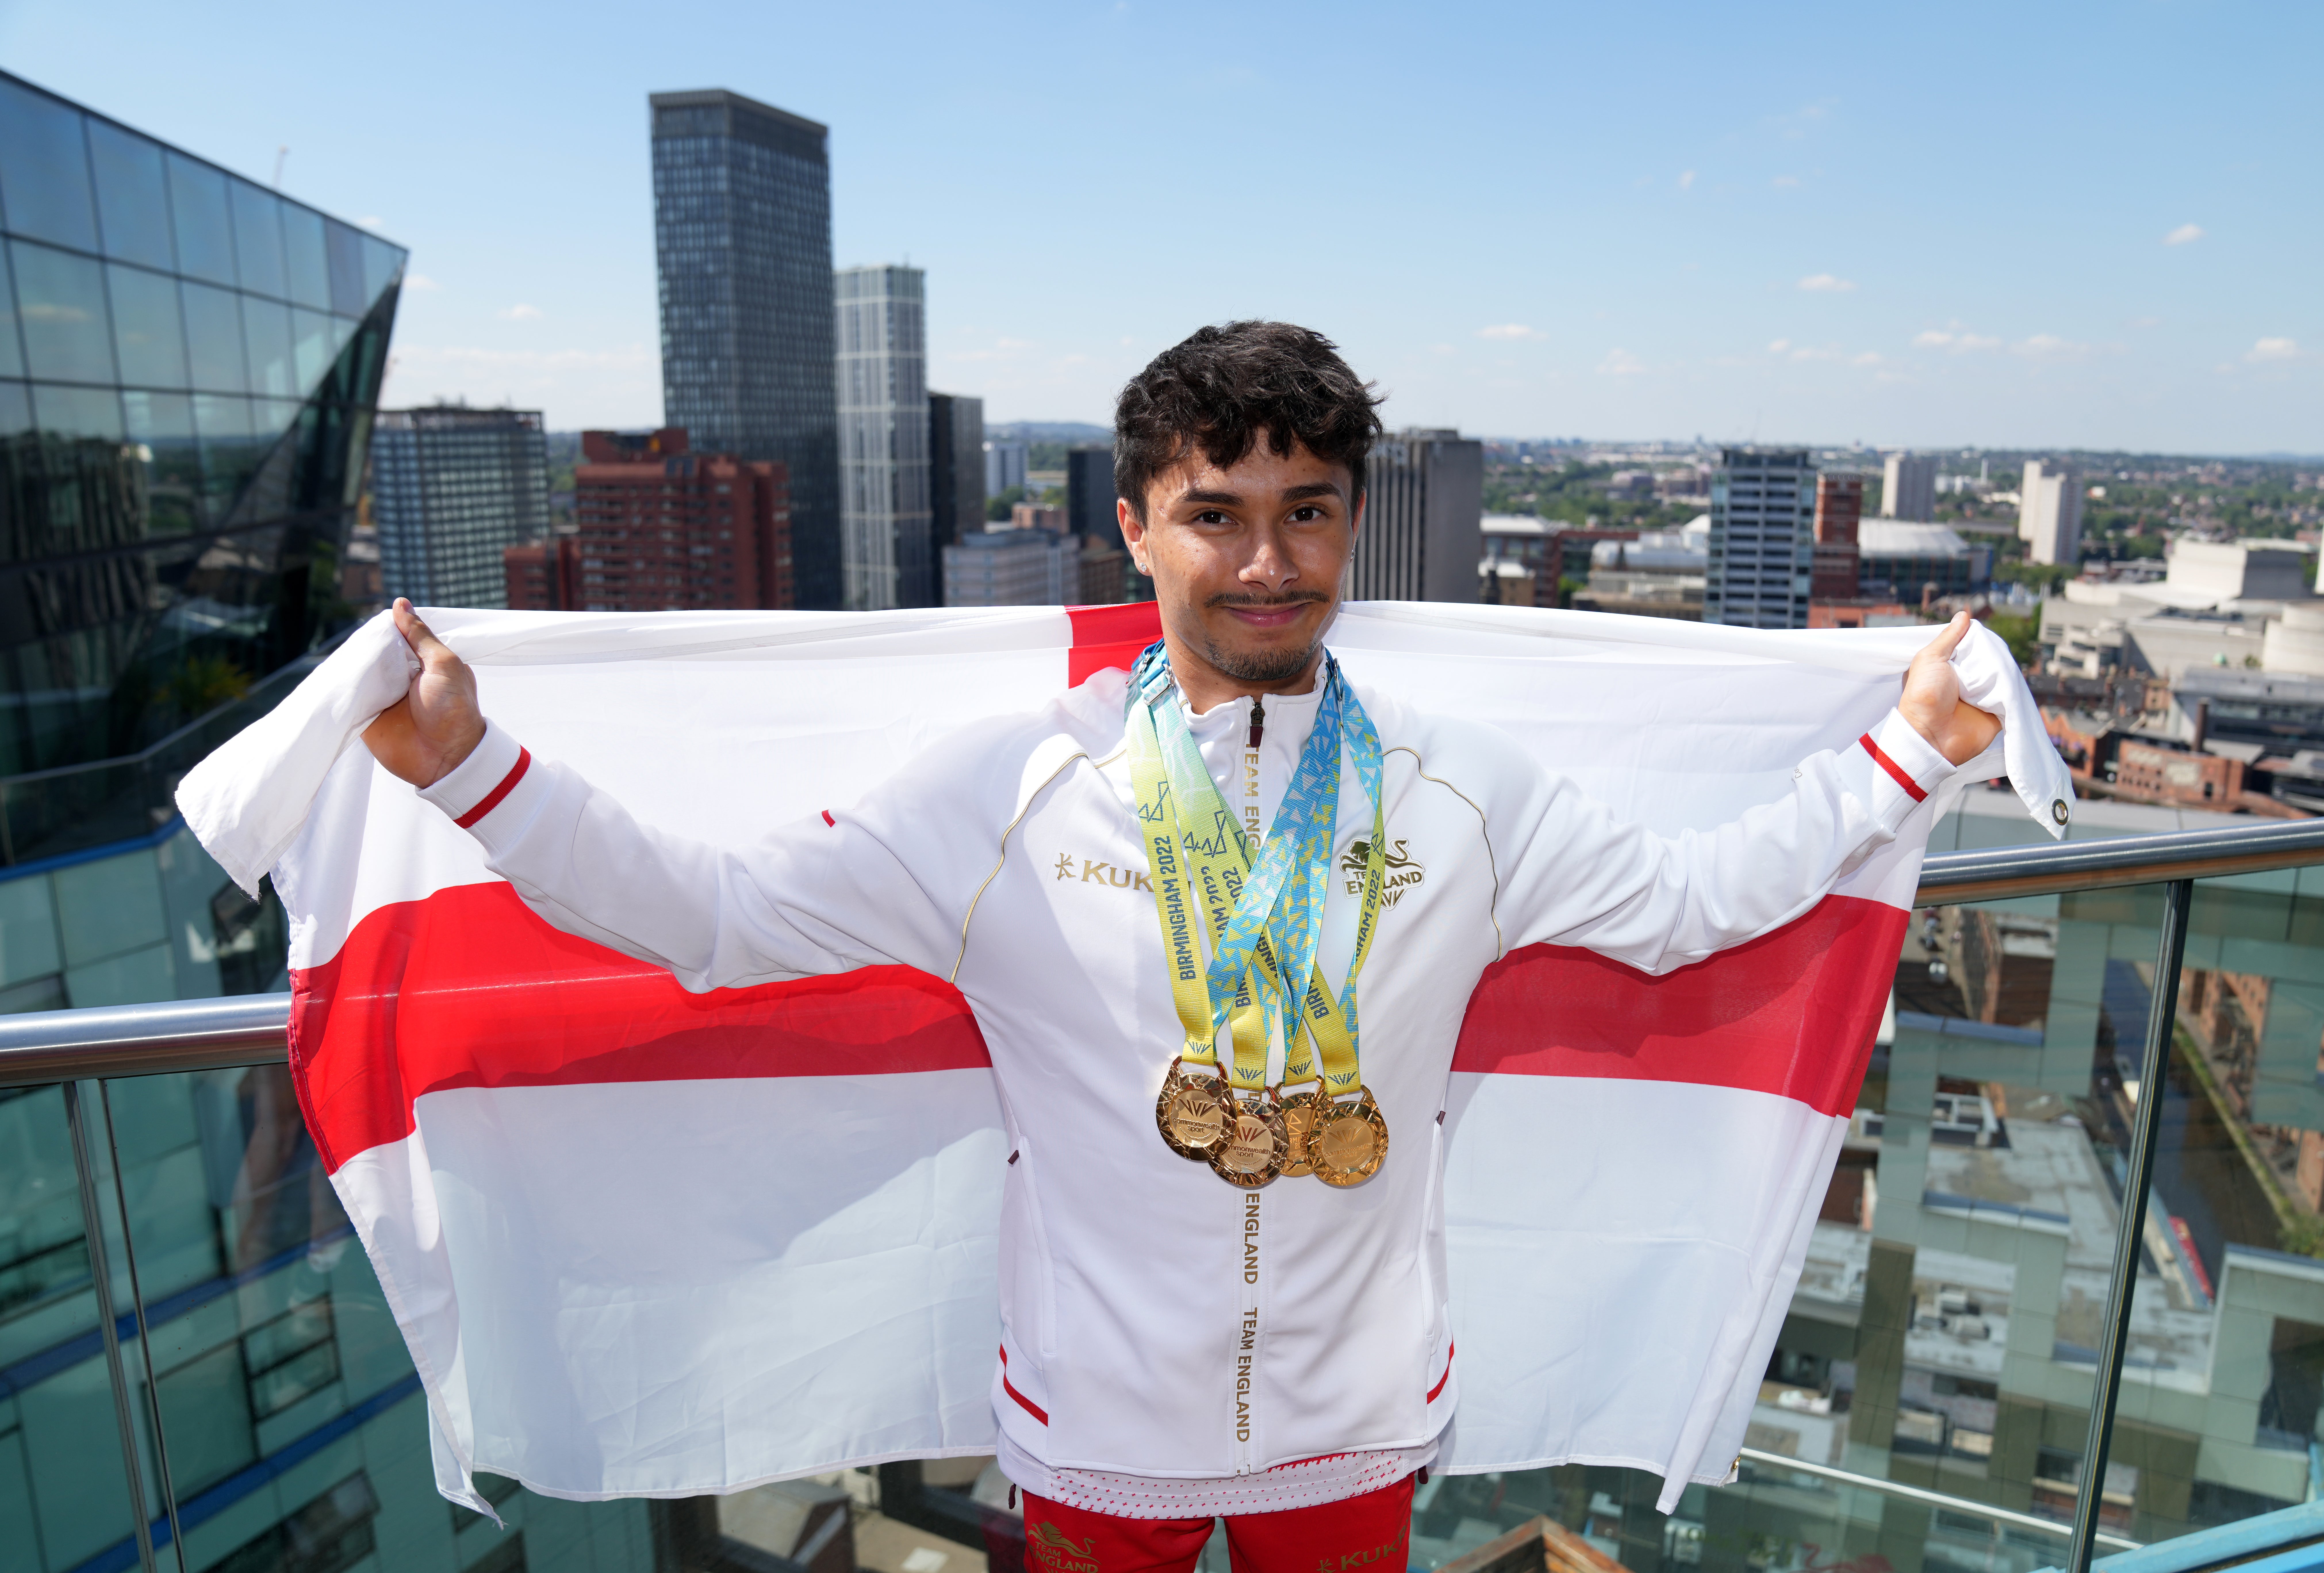 England gymnast Jake Jarman shows off his four gold medals won at Birmingham 2022